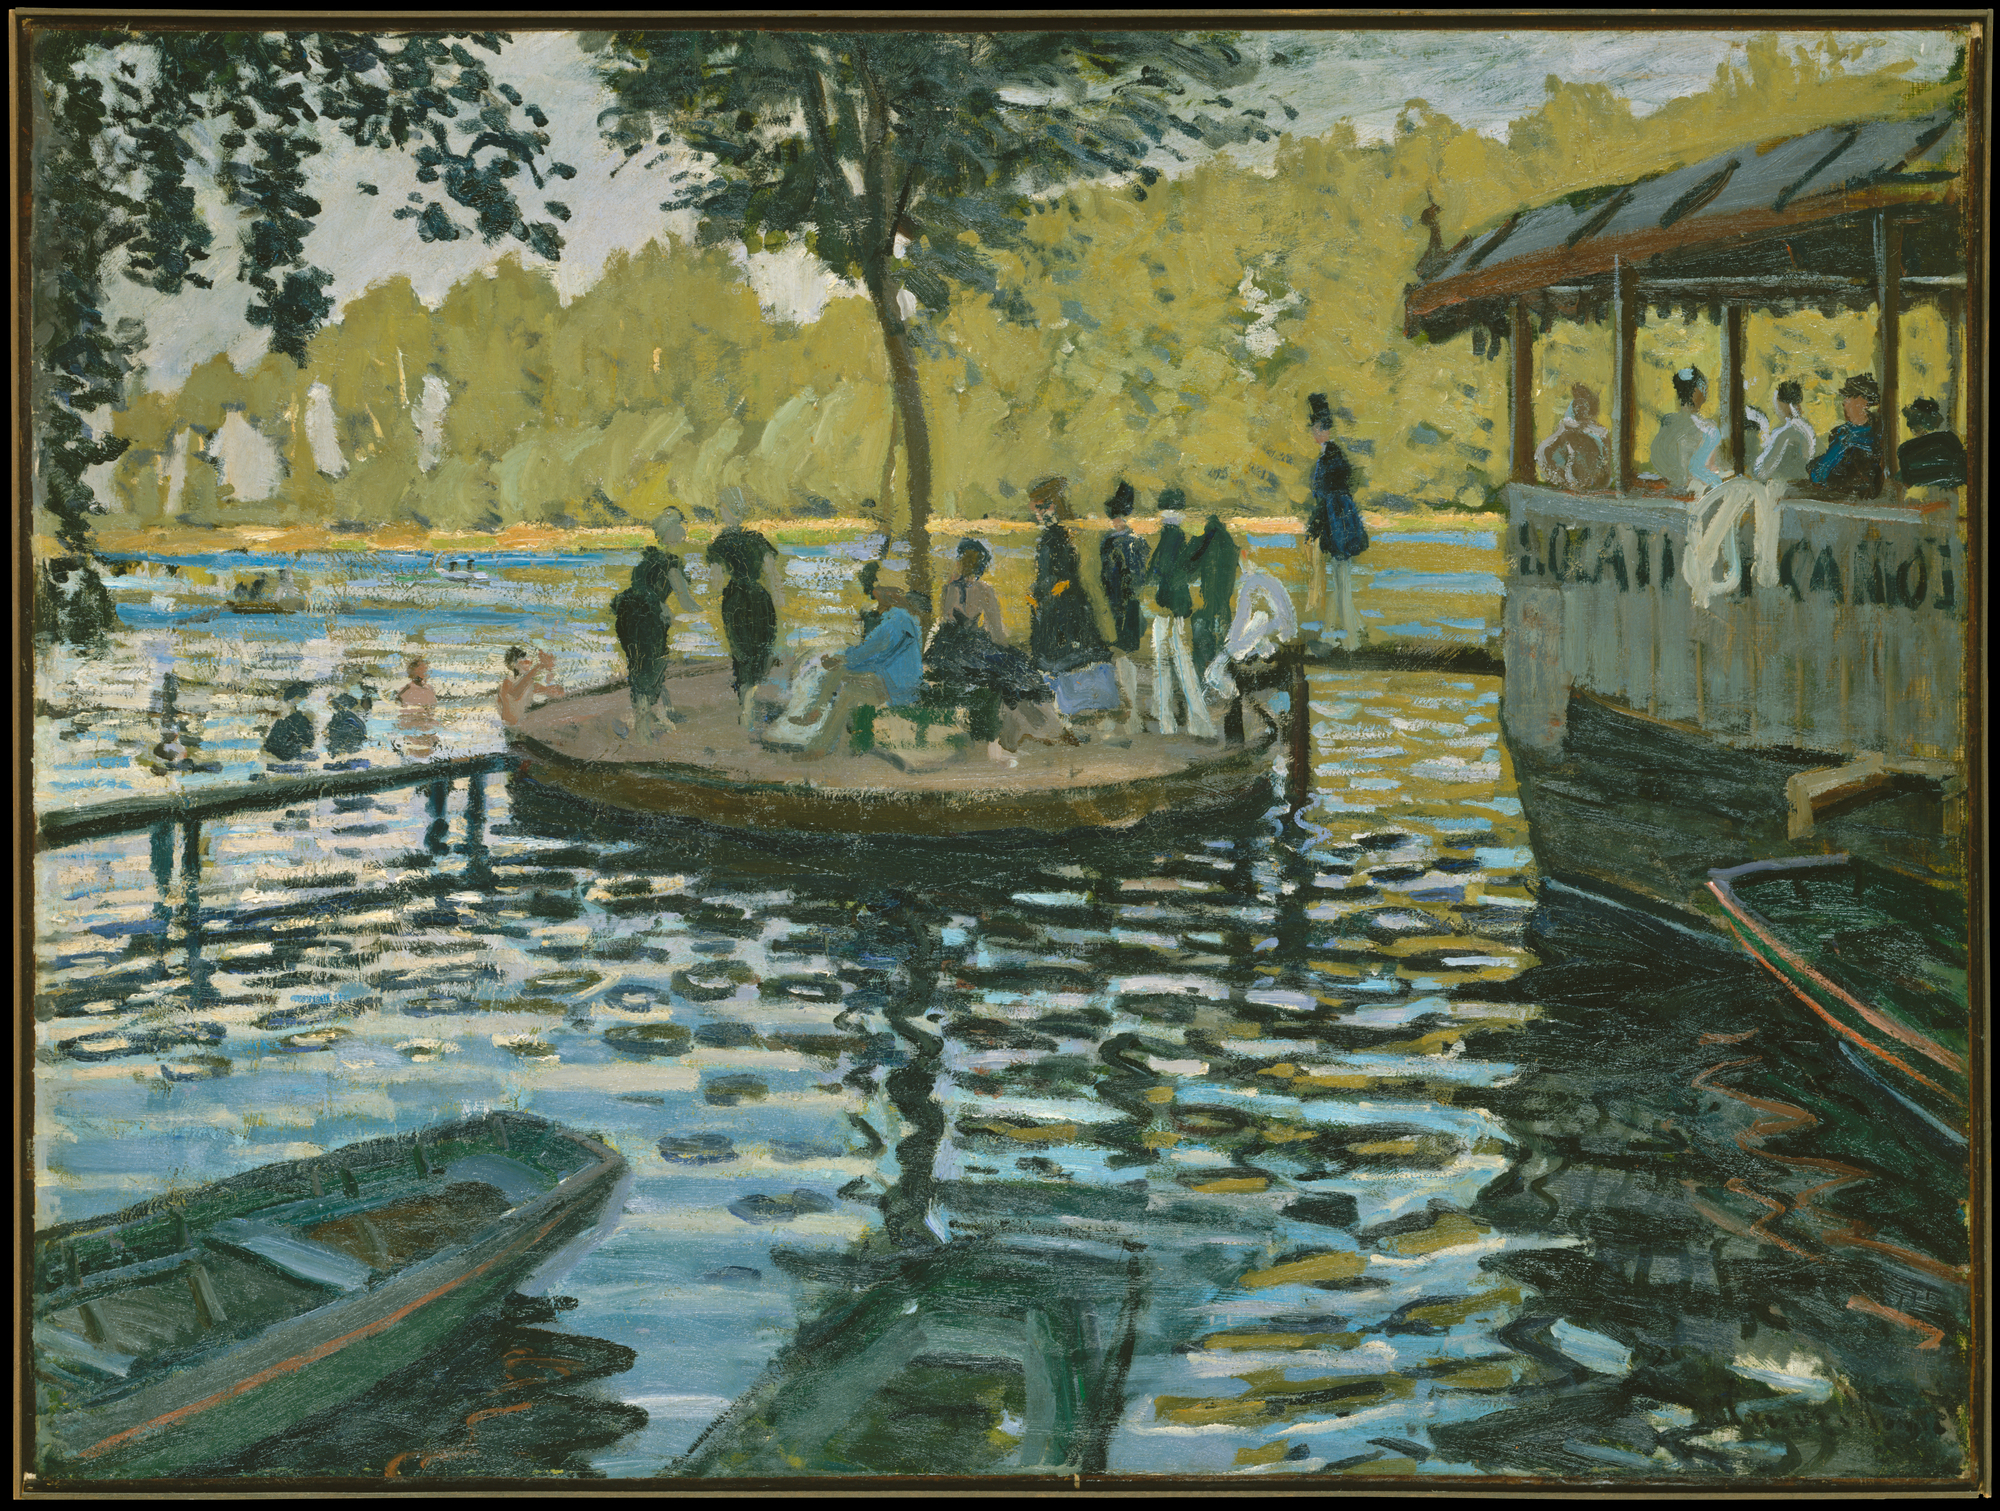 La Grenouillère by Claude Monet - 1869 - 74.6 × 99.7 cm Metropolitan Museum of Art